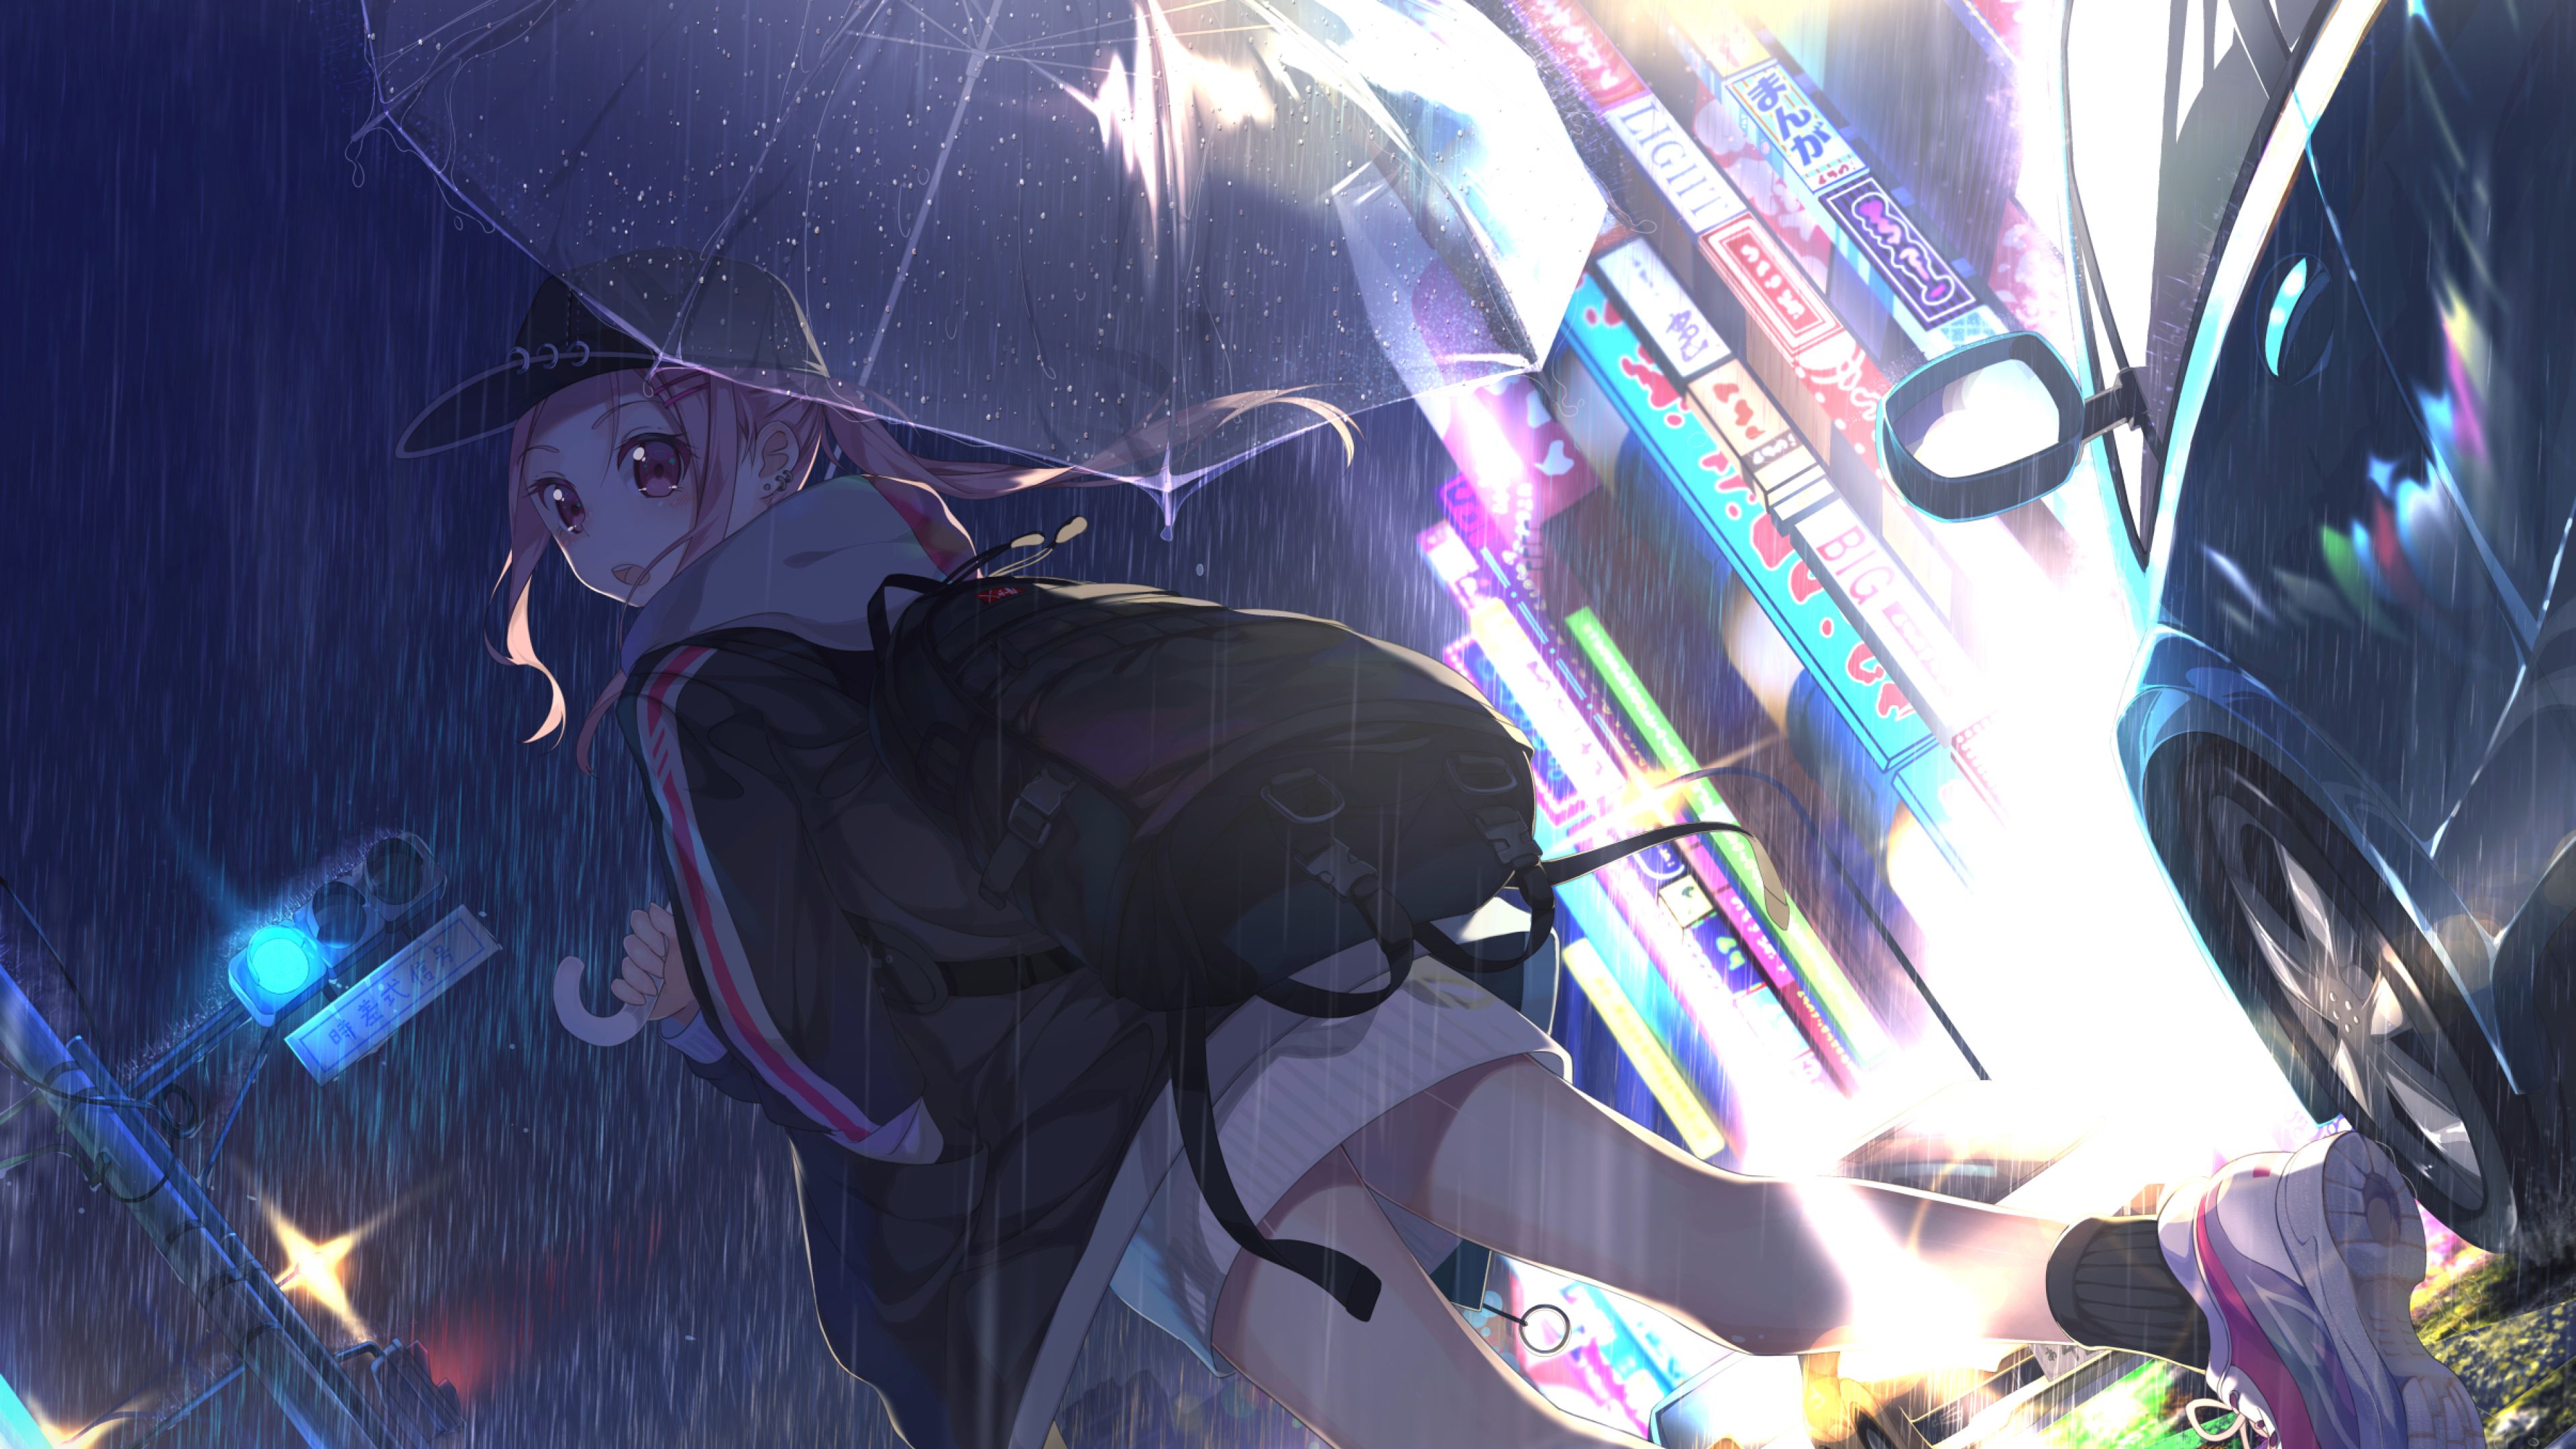 Anime Girl with Umbrella In Rain 4K Wallpaper, HD Anime 4K Wallpaper